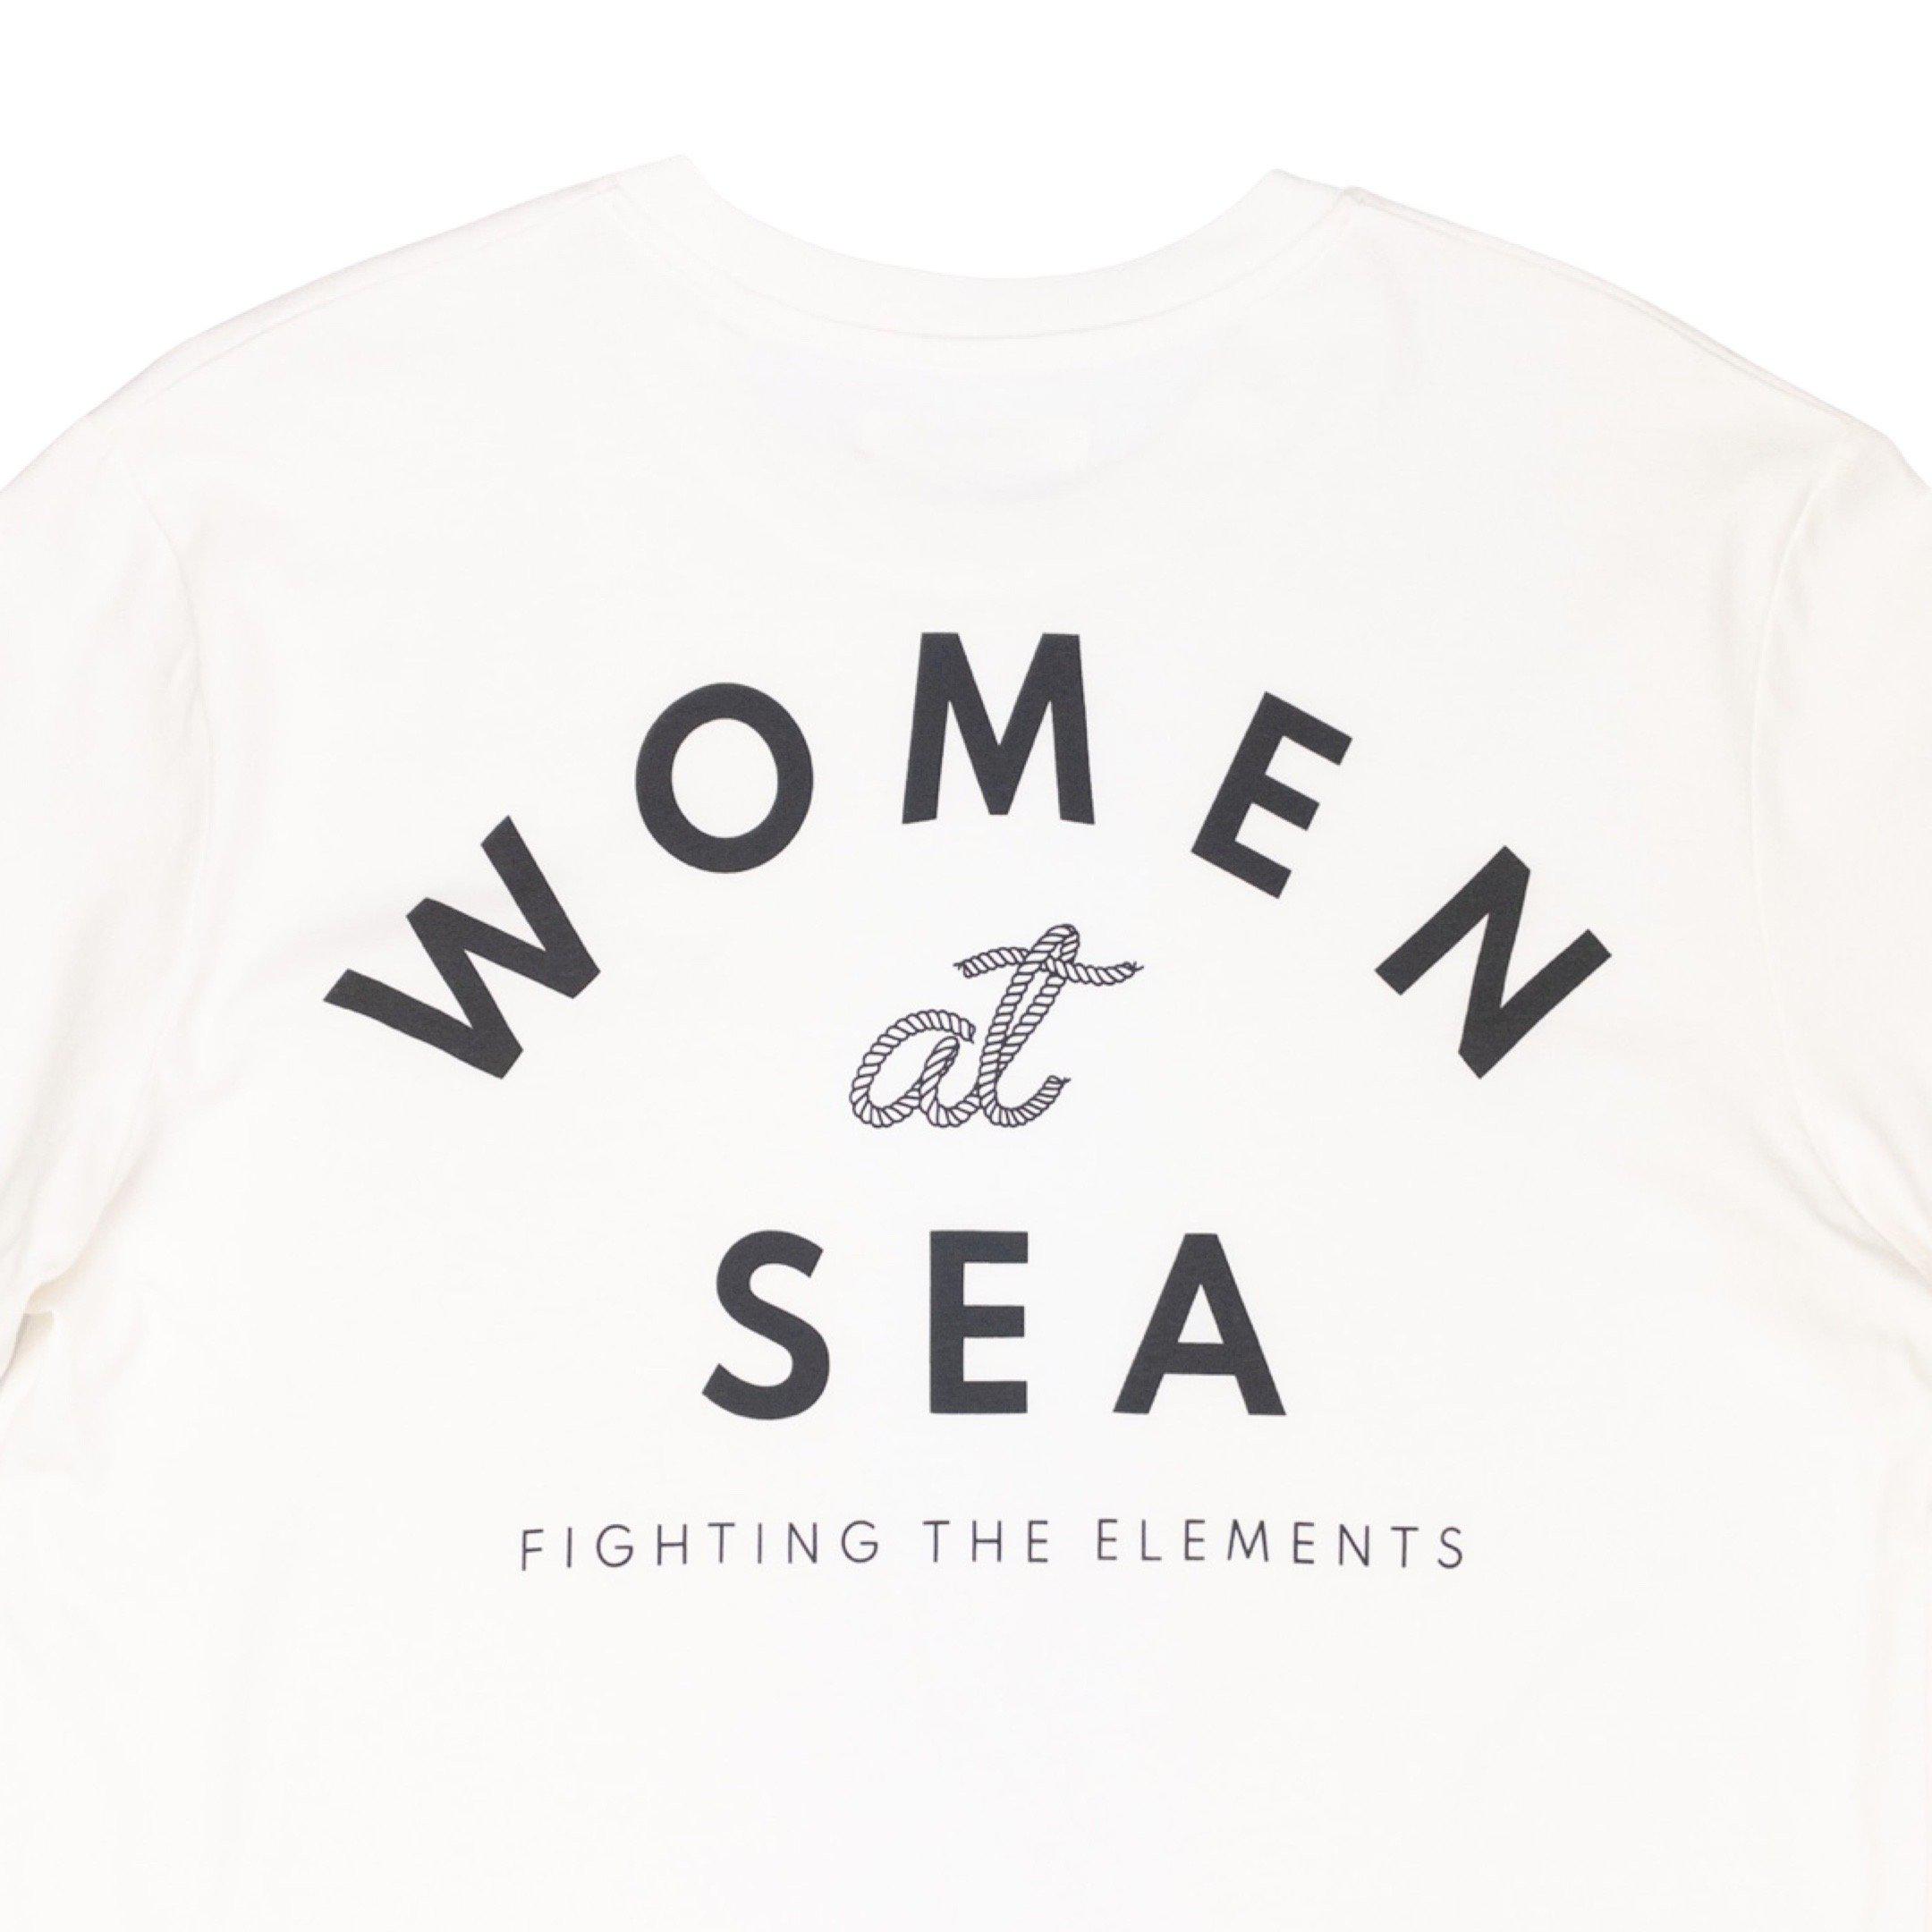 Women at Sea Maritime T-Shirt